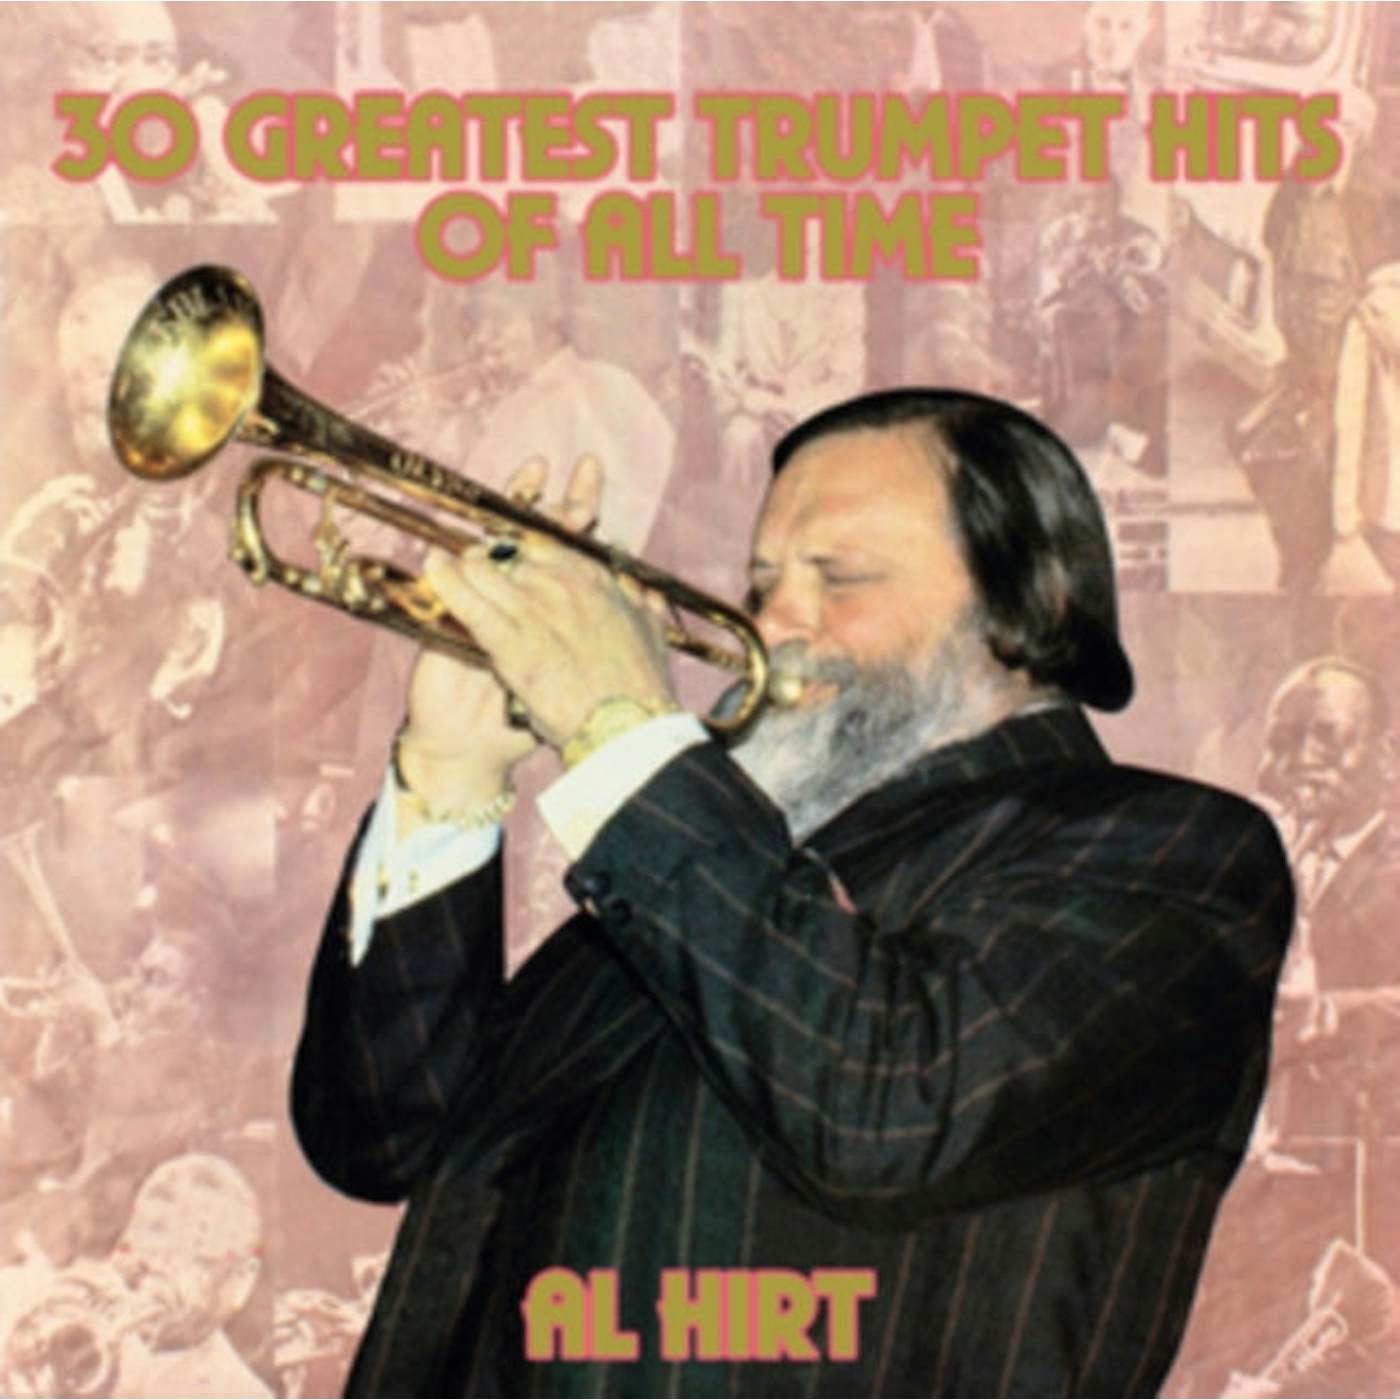 Al Hirt LP - Greatest Trumpet Hits Of All Time (Vinyl)